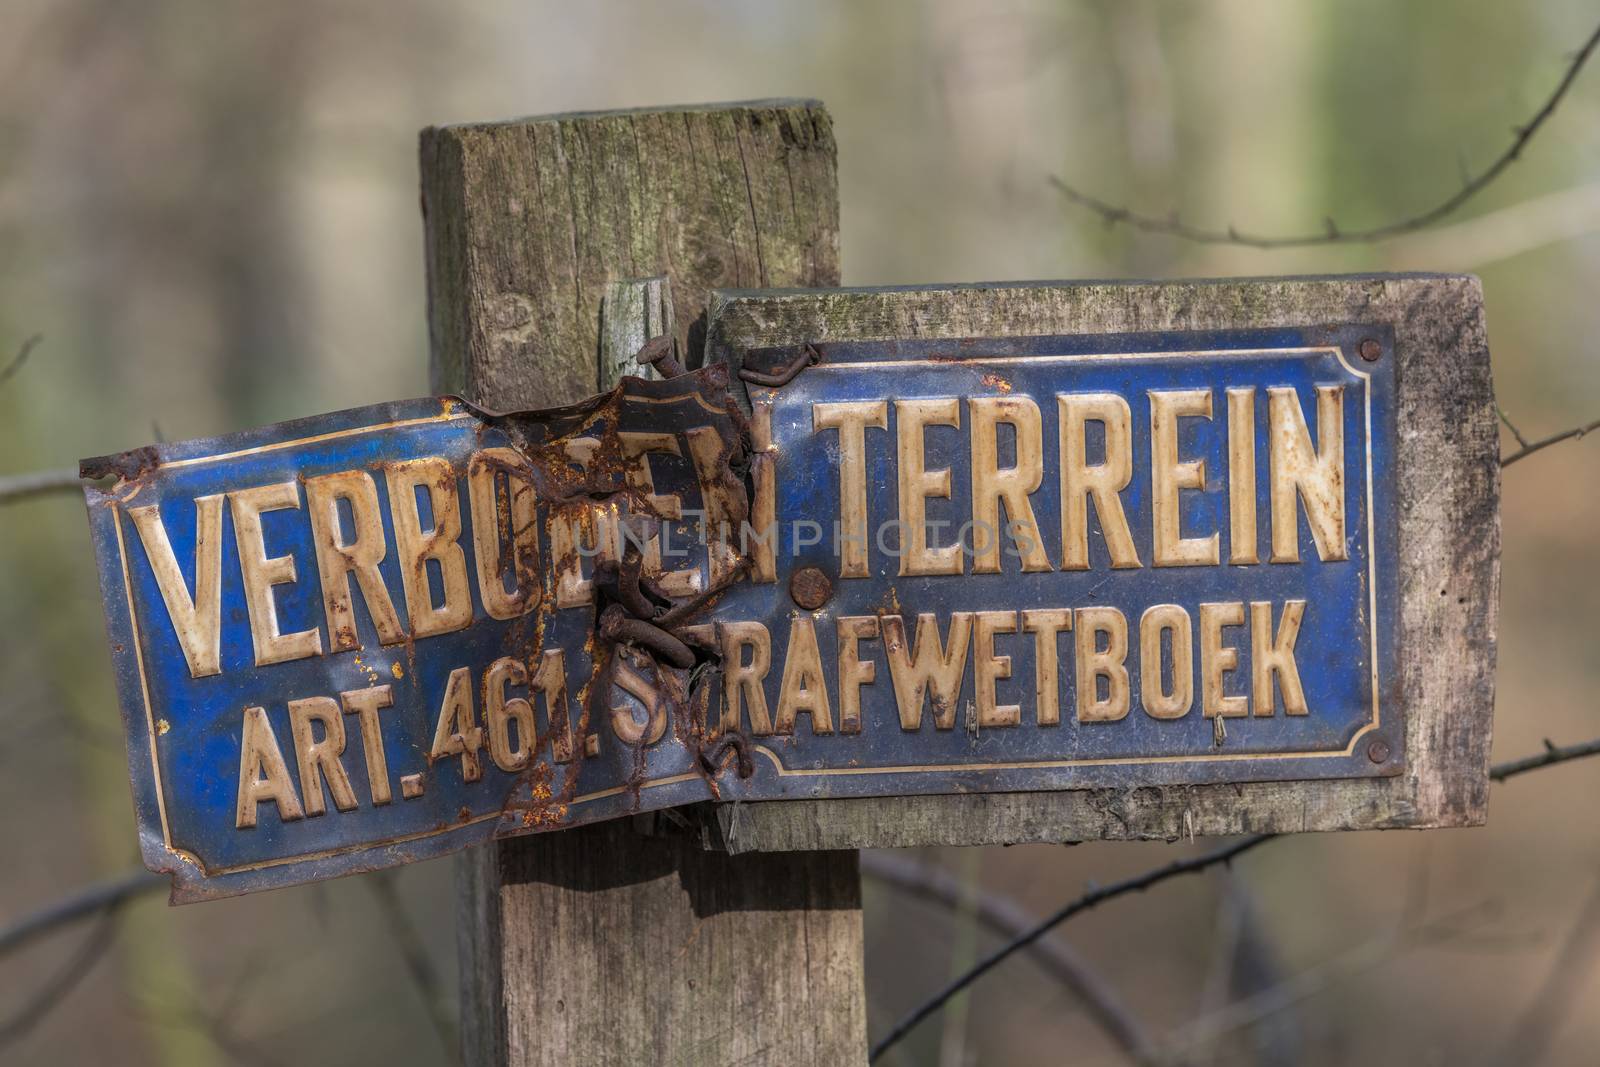 Sign forbidden entry in Dutch language by Tofotografie